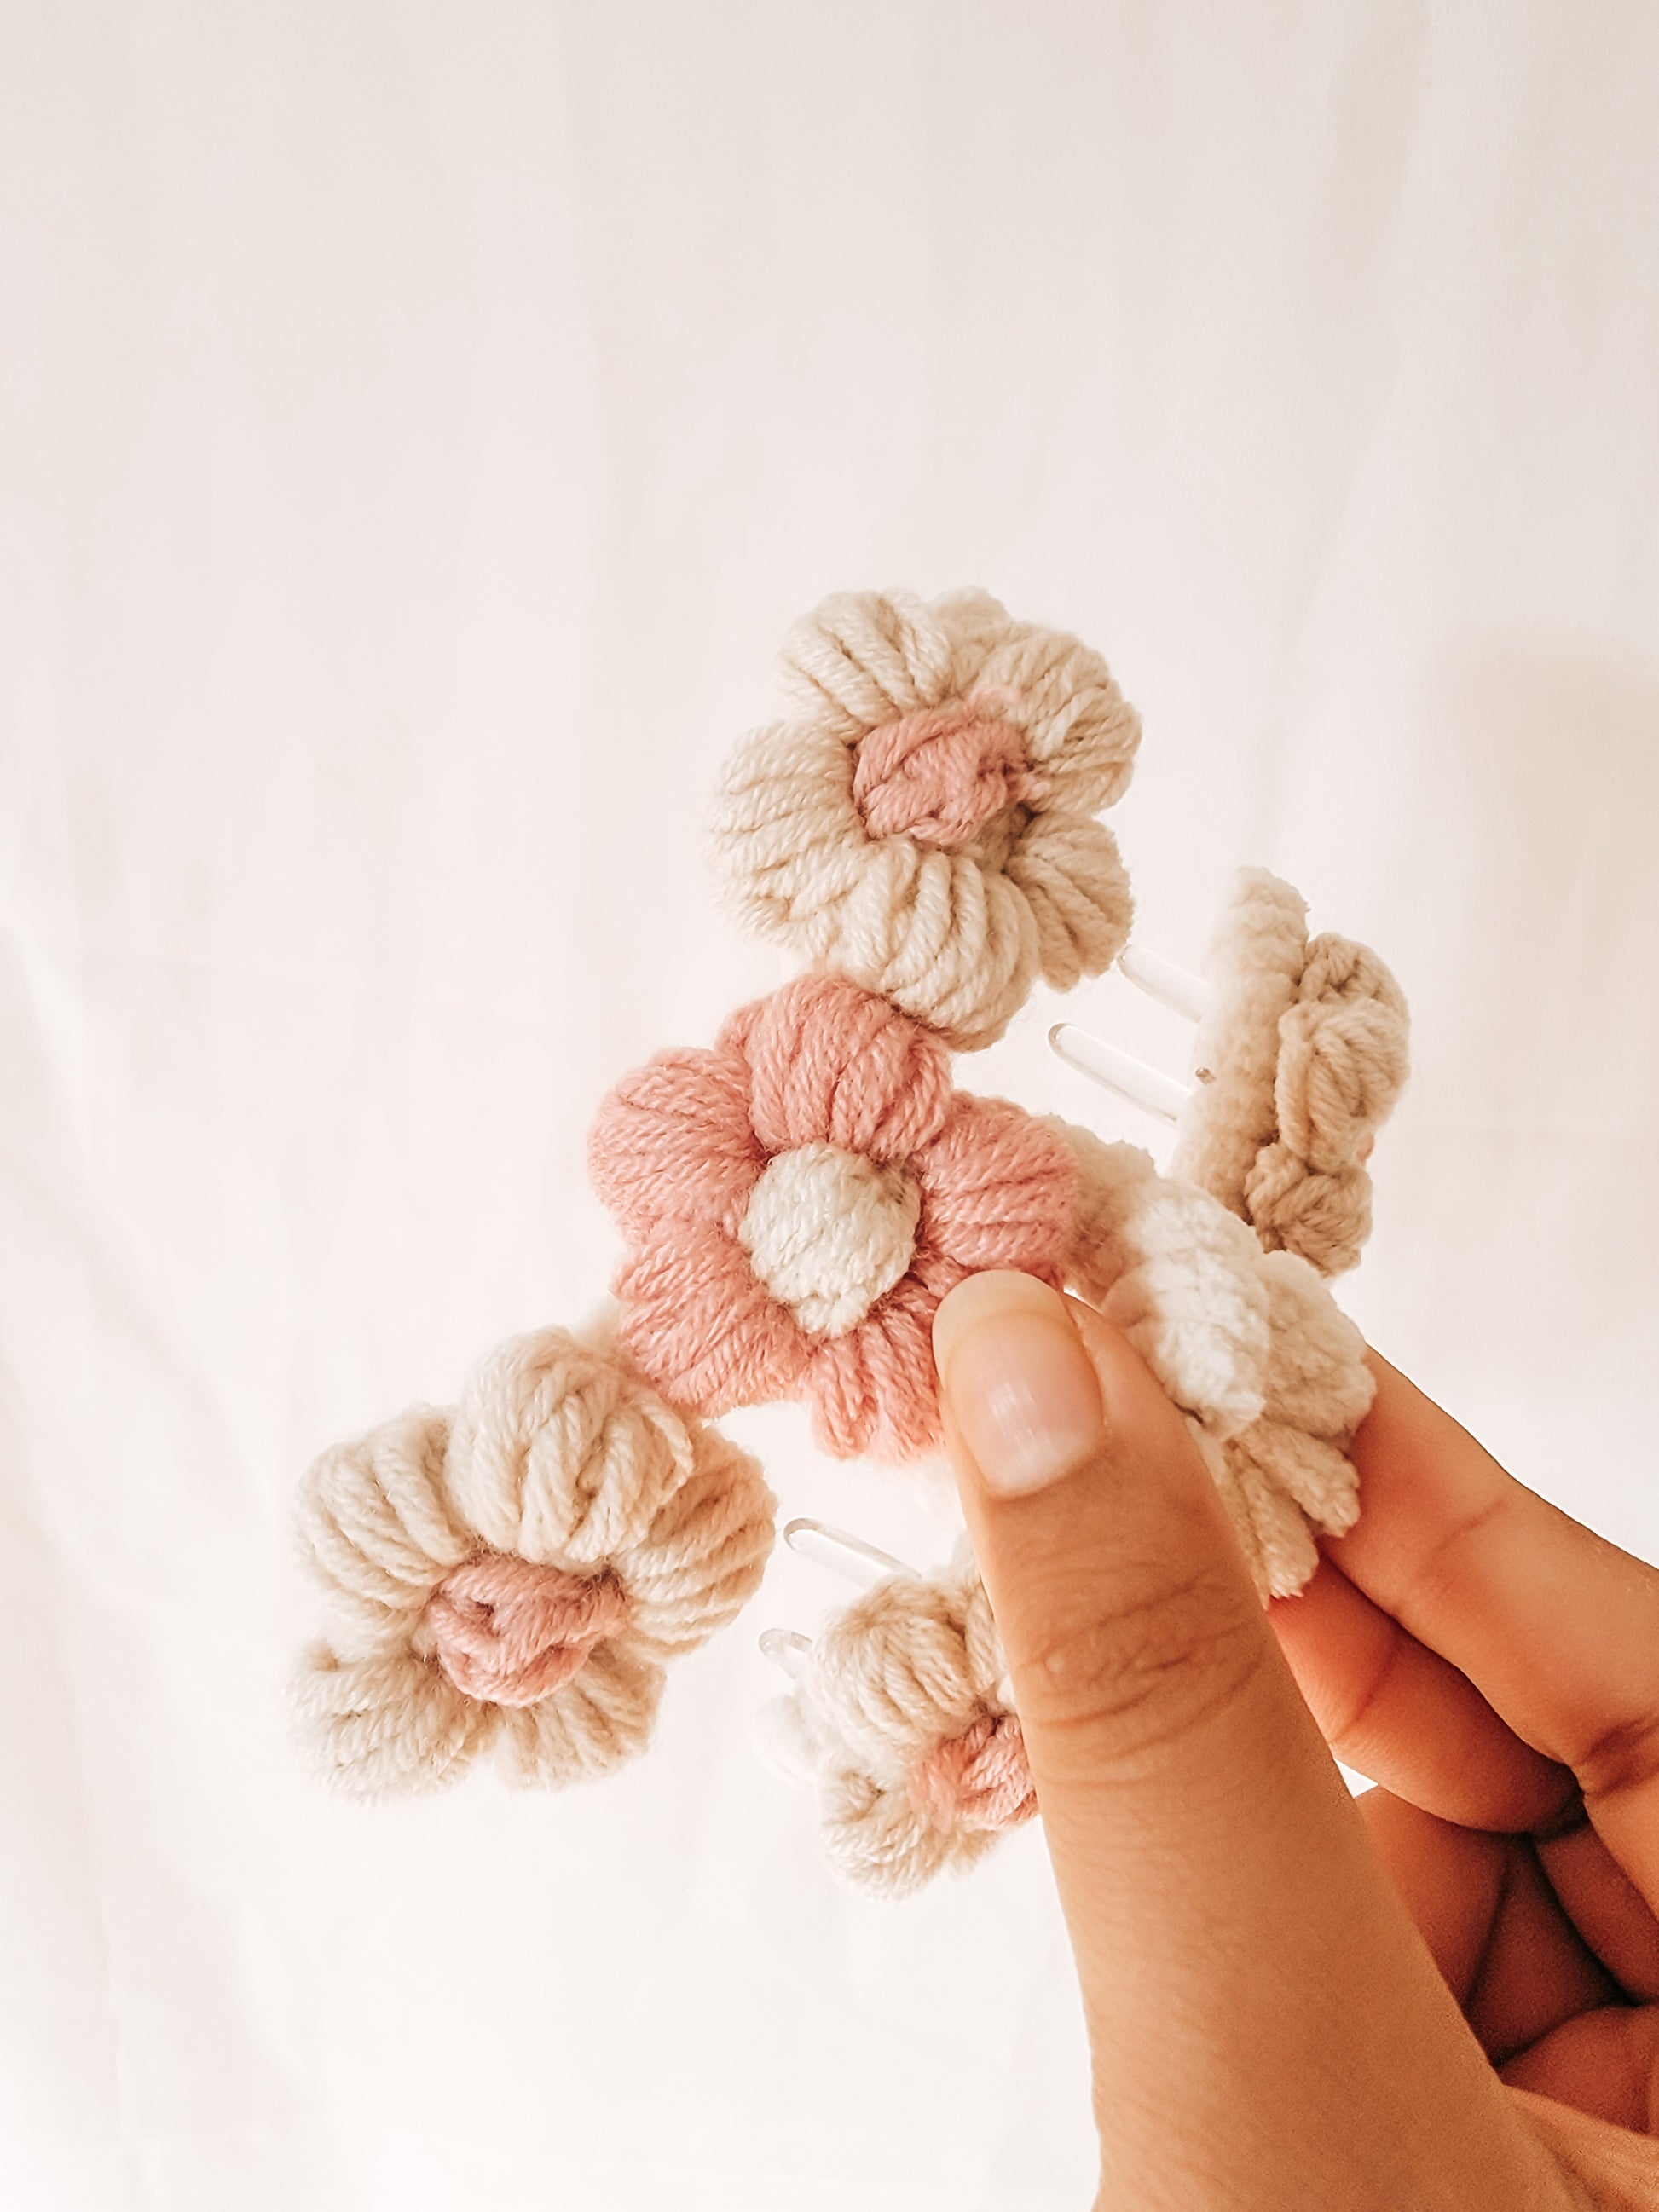 Crochet clips